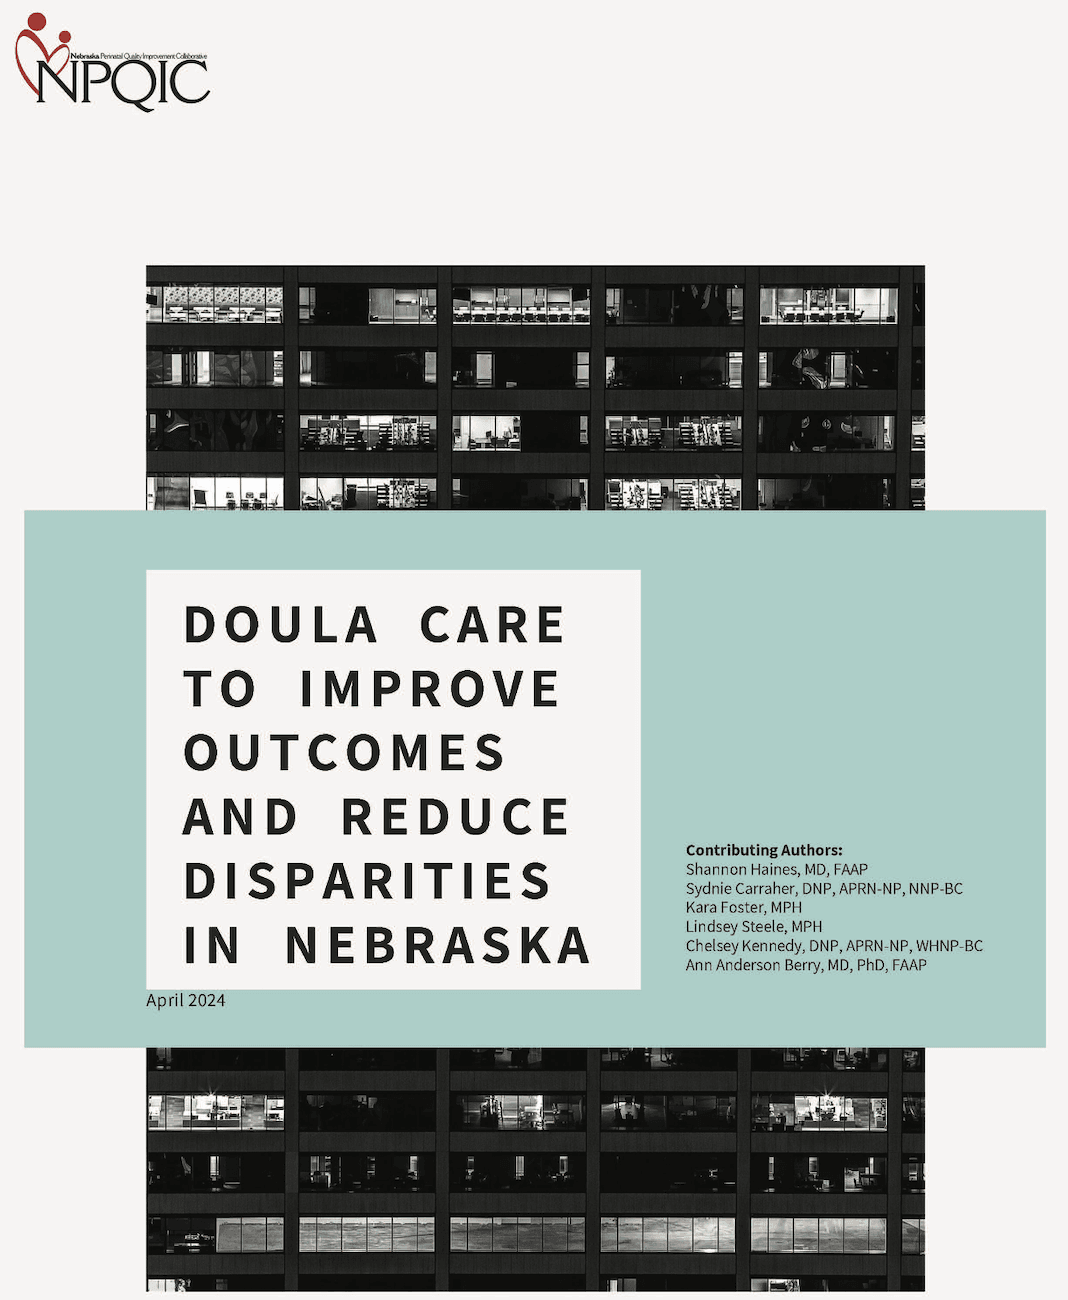 NPQIC White Paper Released: "Doula Care to Improve Outcomes and Reduce Disparities in Nebraska"